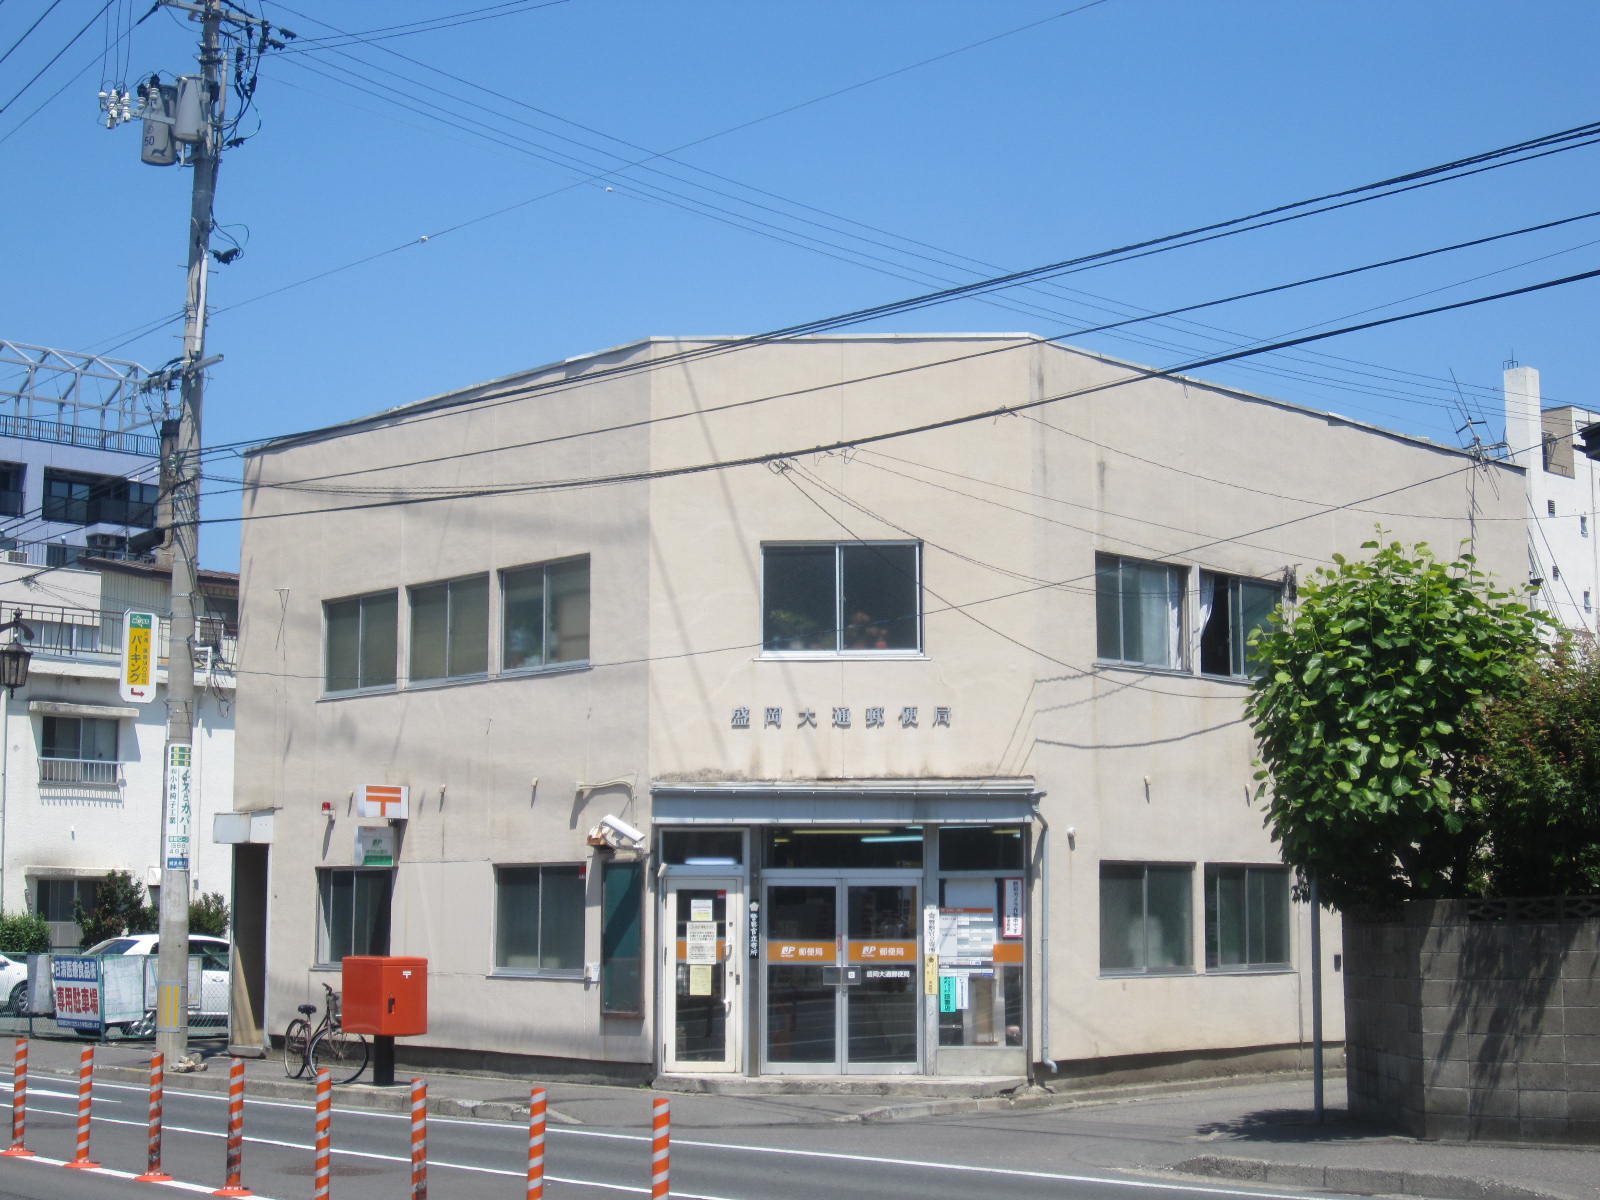 post office. 364m to Morioka Odori post office (post office)